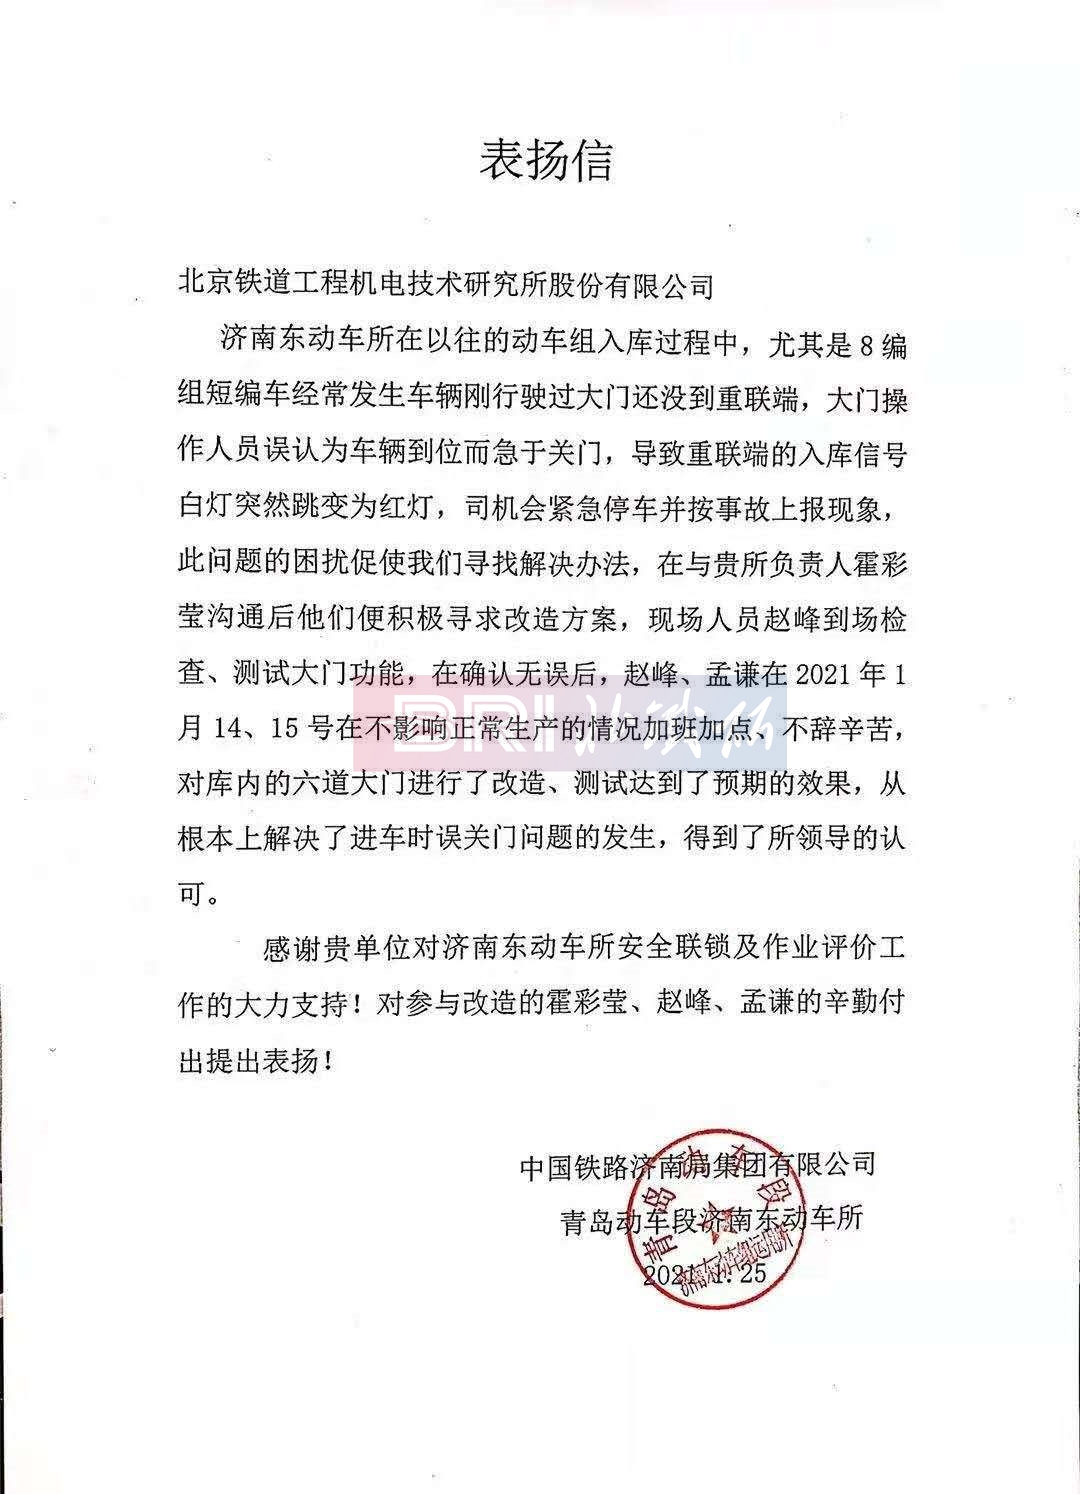 The commendation letter from Jinan EMU Station of Qingdao EMU Depot.